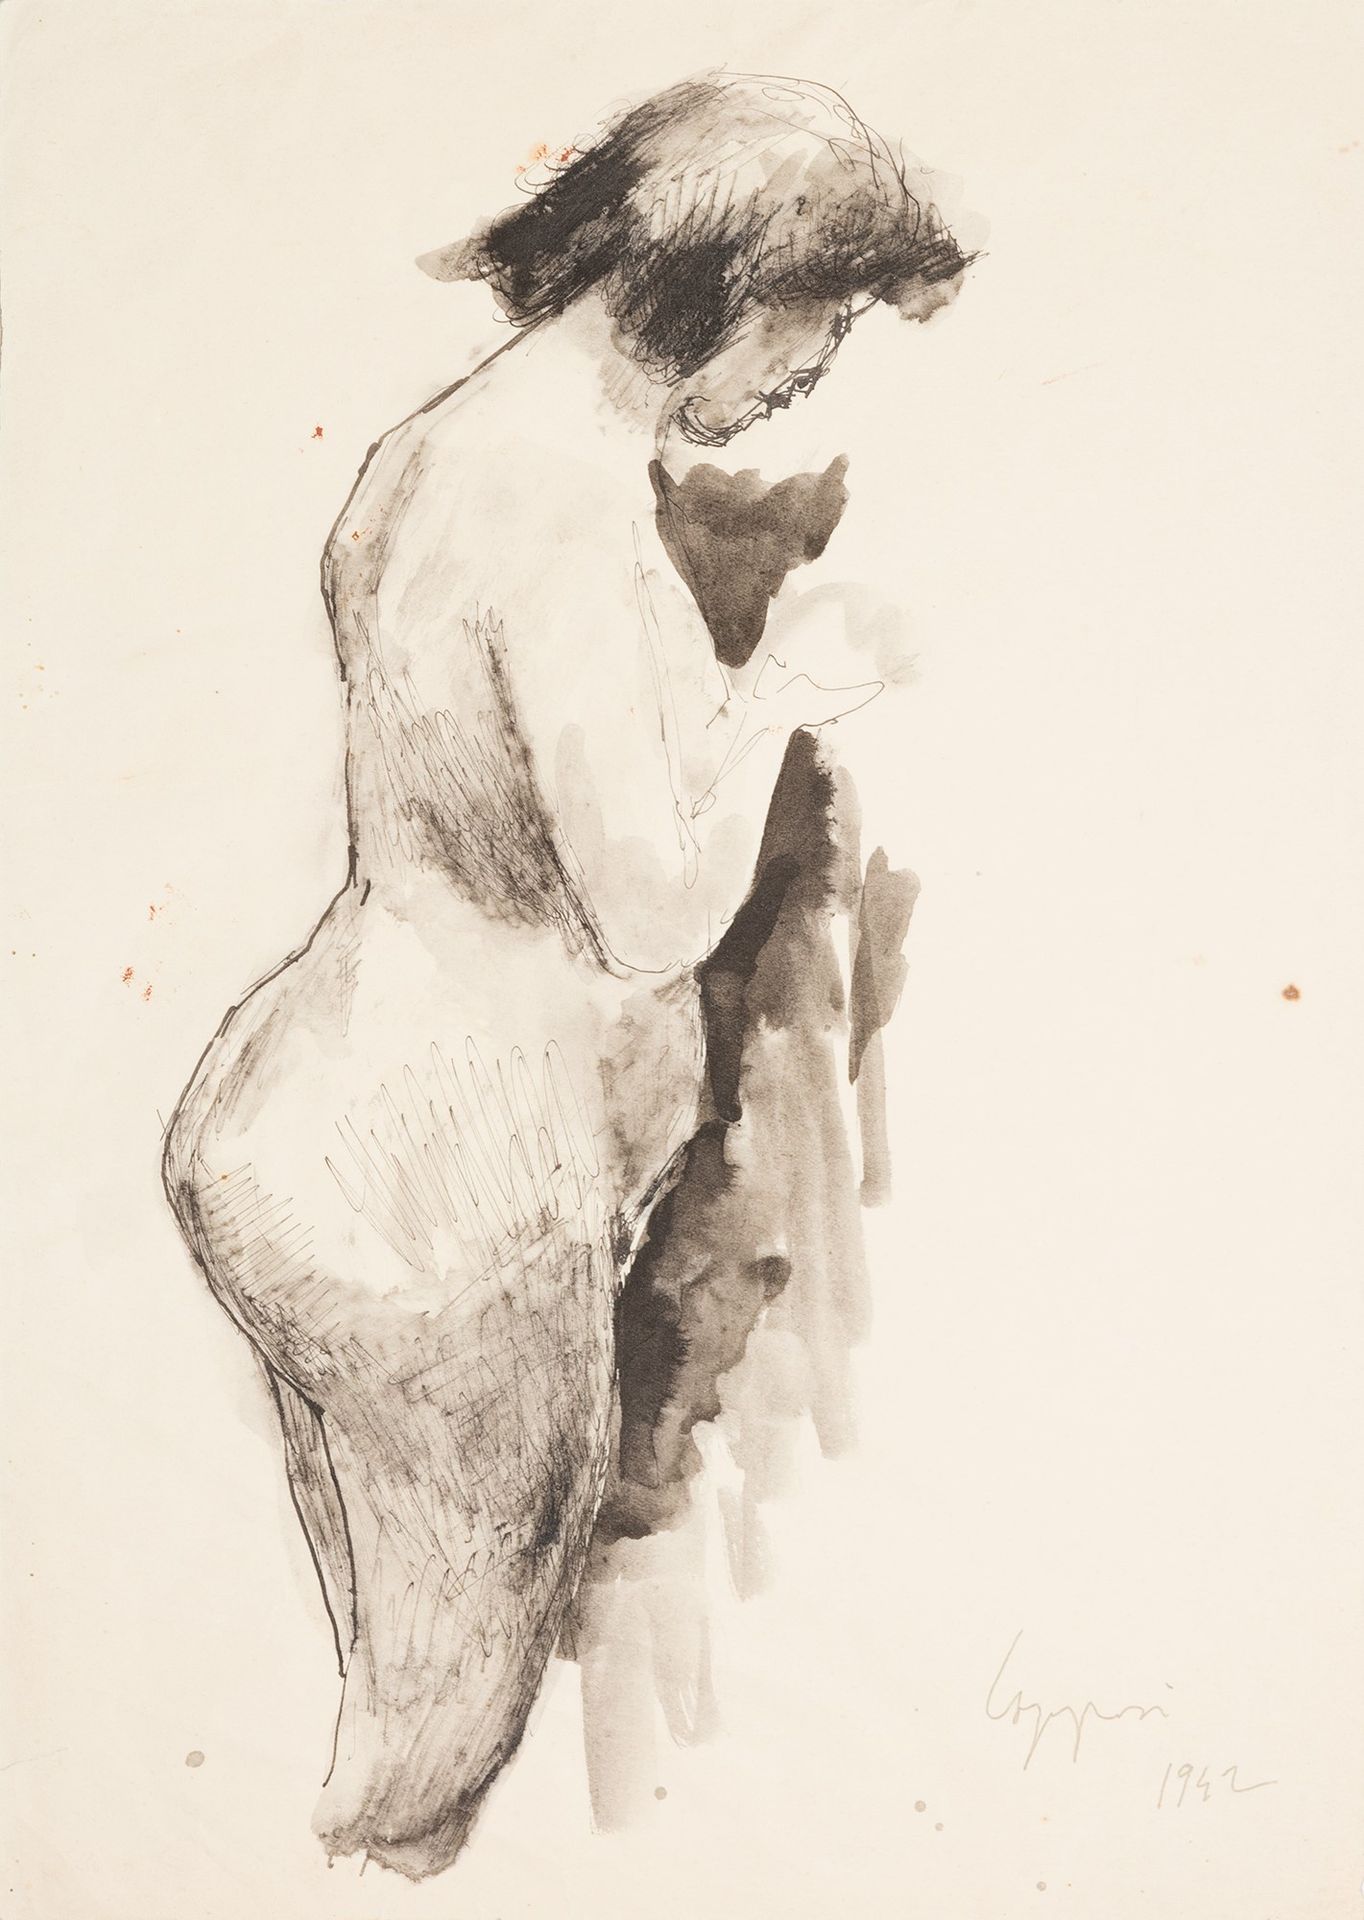 GIUSEPPE CAPOGROSSI 女性侧面裸体，1942年

瓷器墨水和蛋彩纸
35 x 25.2 cm
右下方签名：Capogrossi 1942

物&hellip;